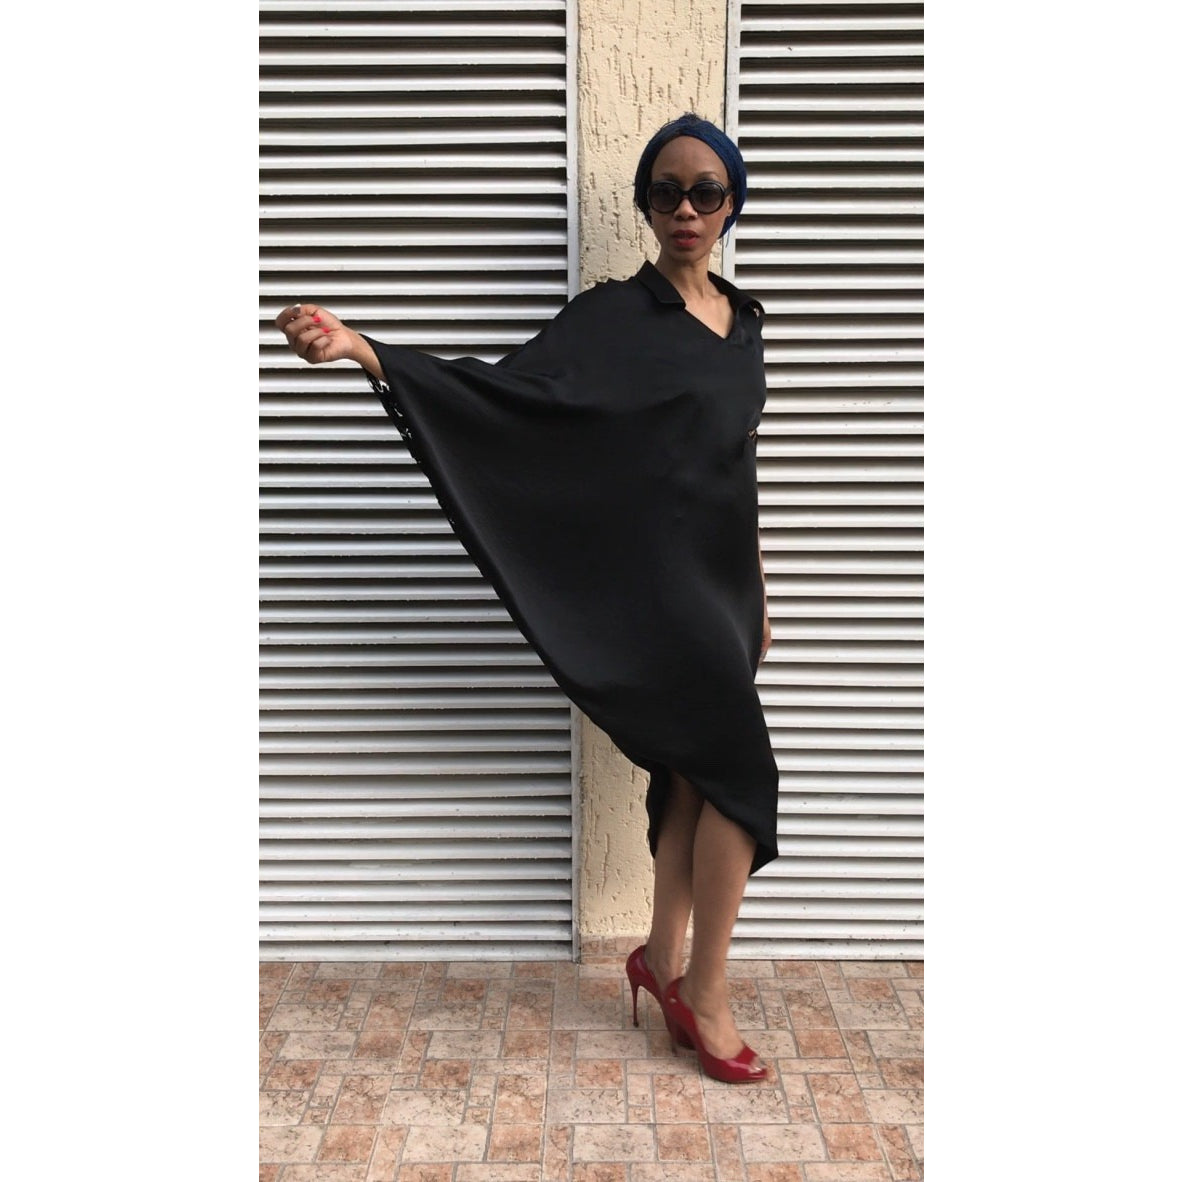 BLACK SARI KAFTAN DRESS, WITH LACE DETAIL